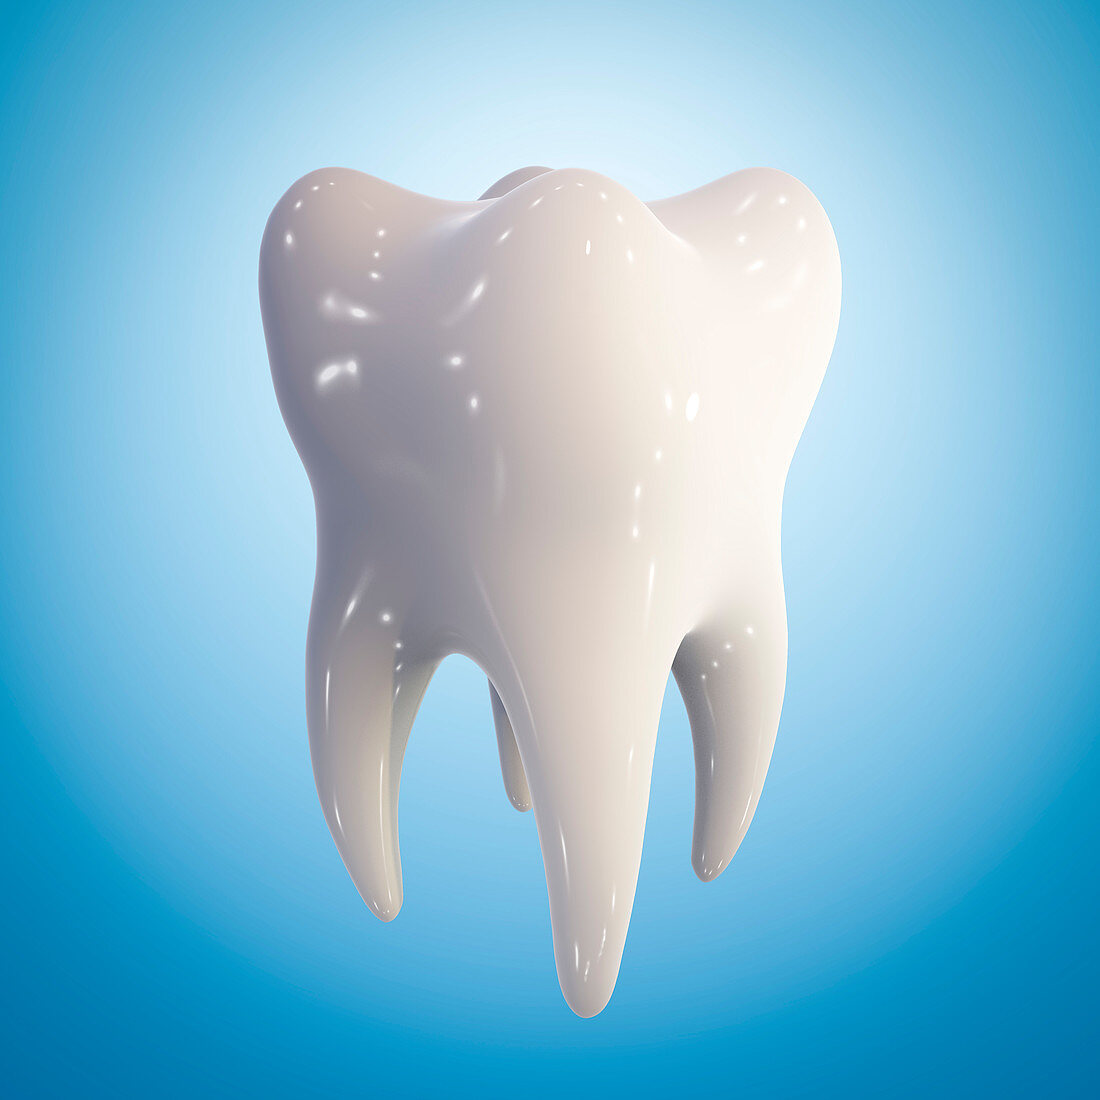 Healthy molar tooth, illustration